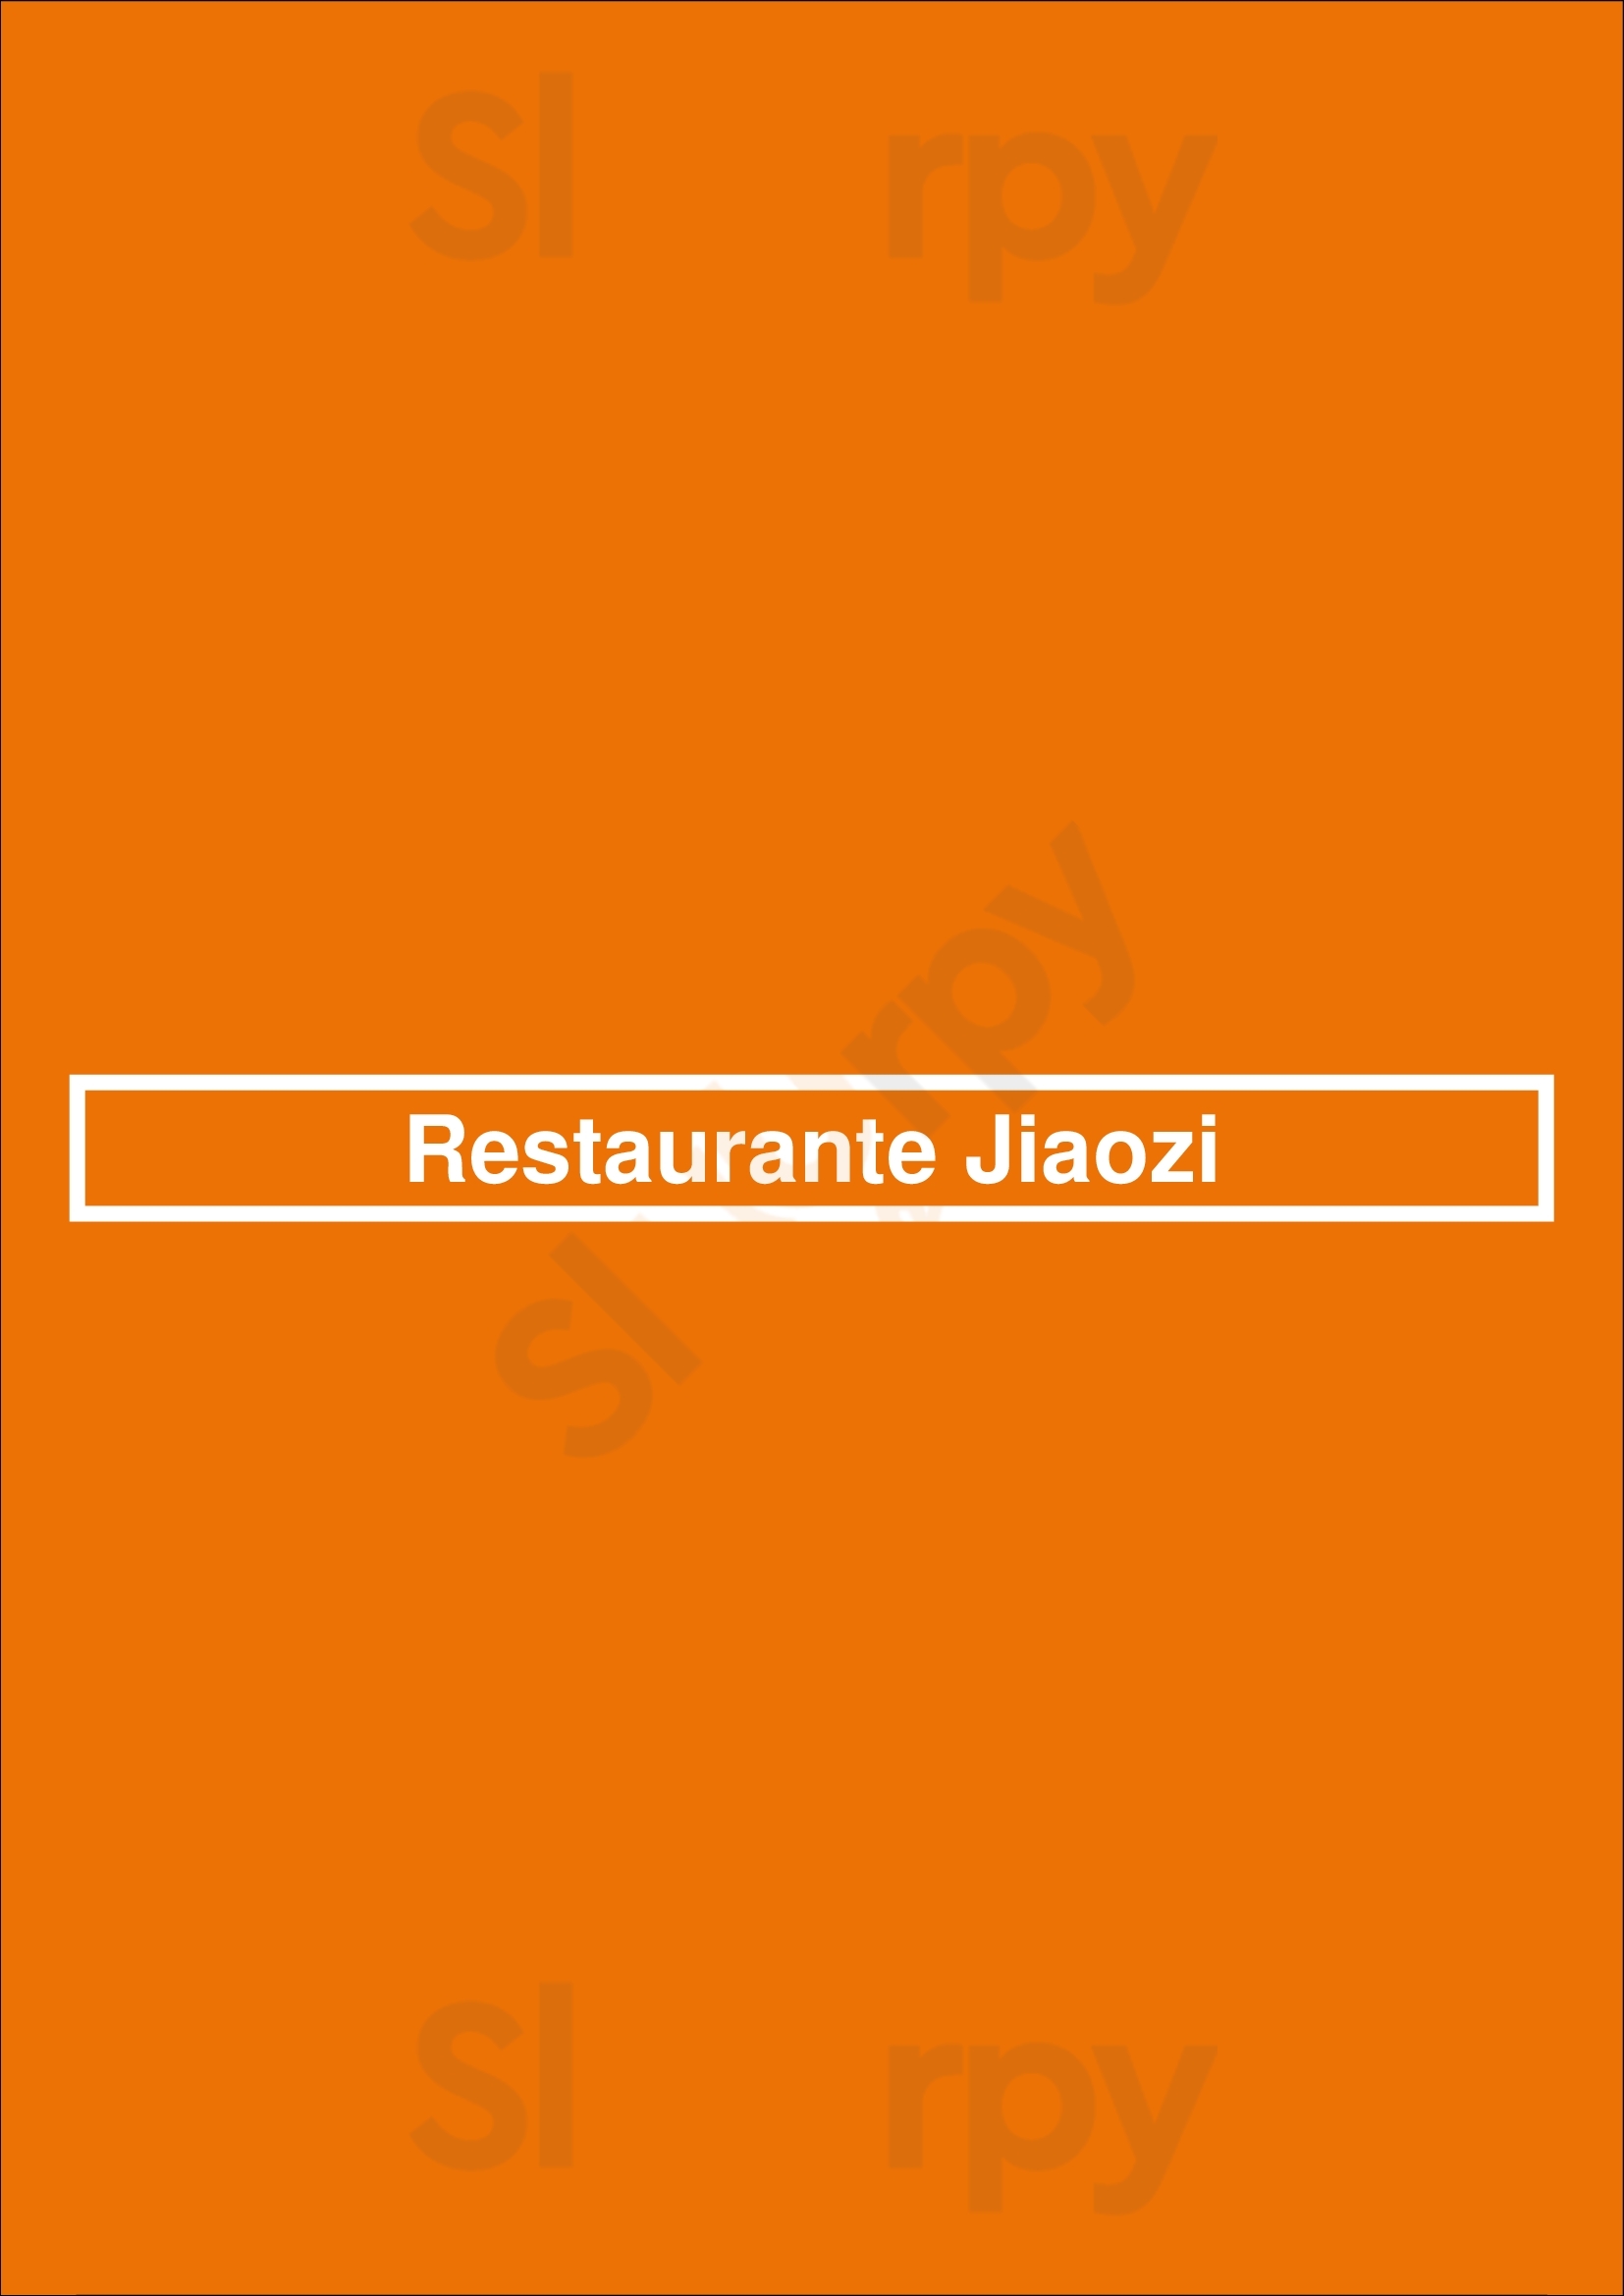 Restaurante Jiaozi Barcelona Menu - 1